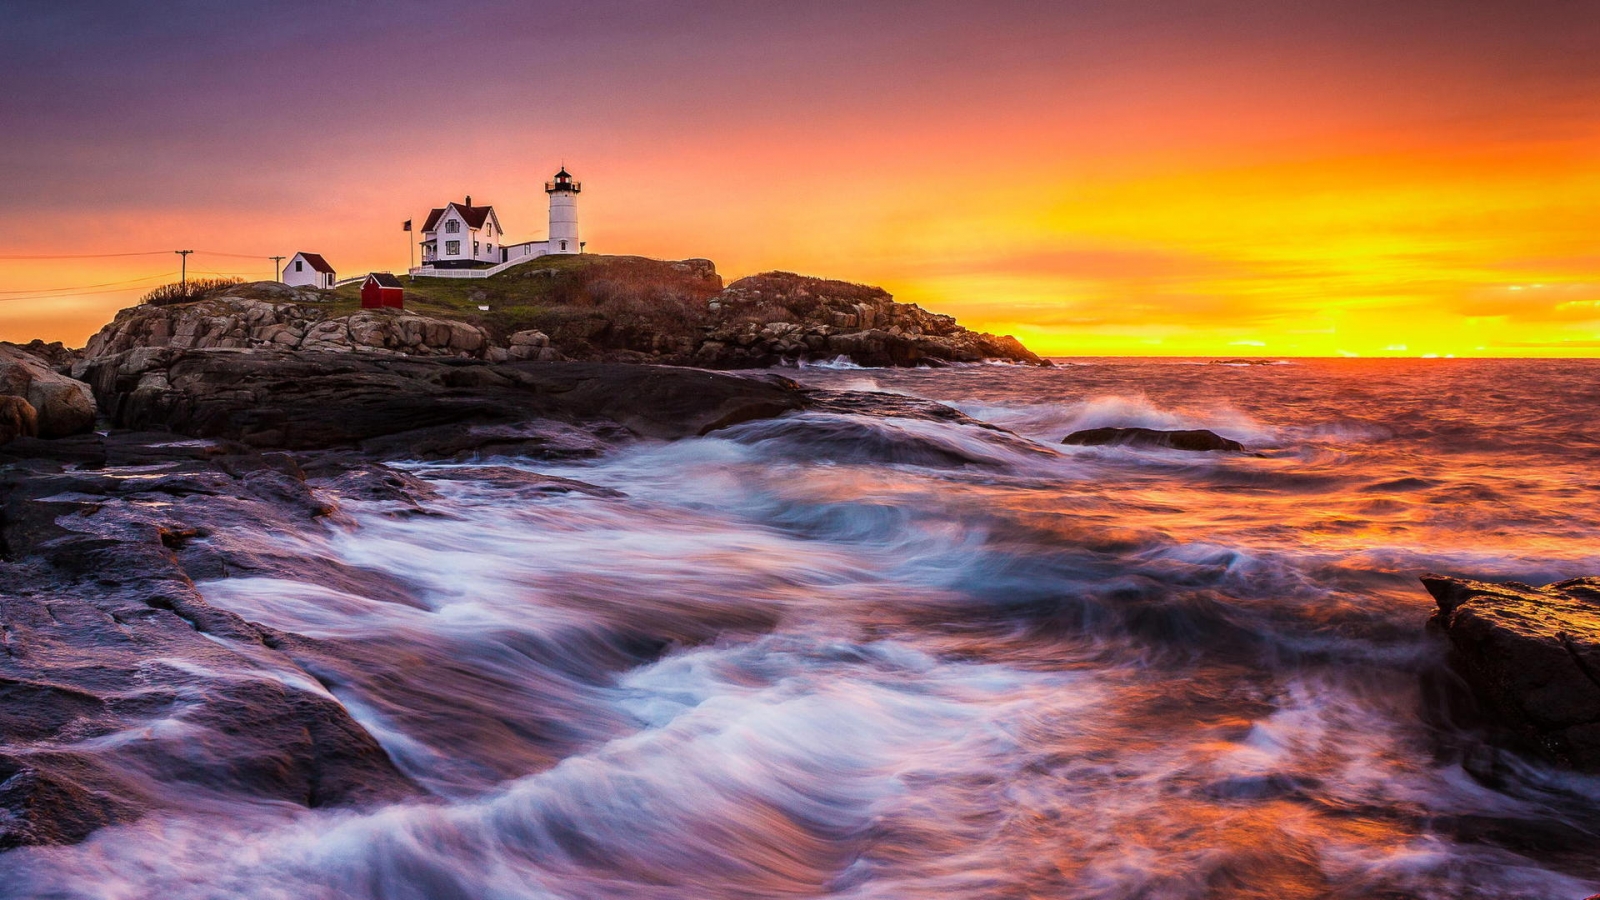 Lighthouse on Rocks for 1600 x 900 HDTV resolution